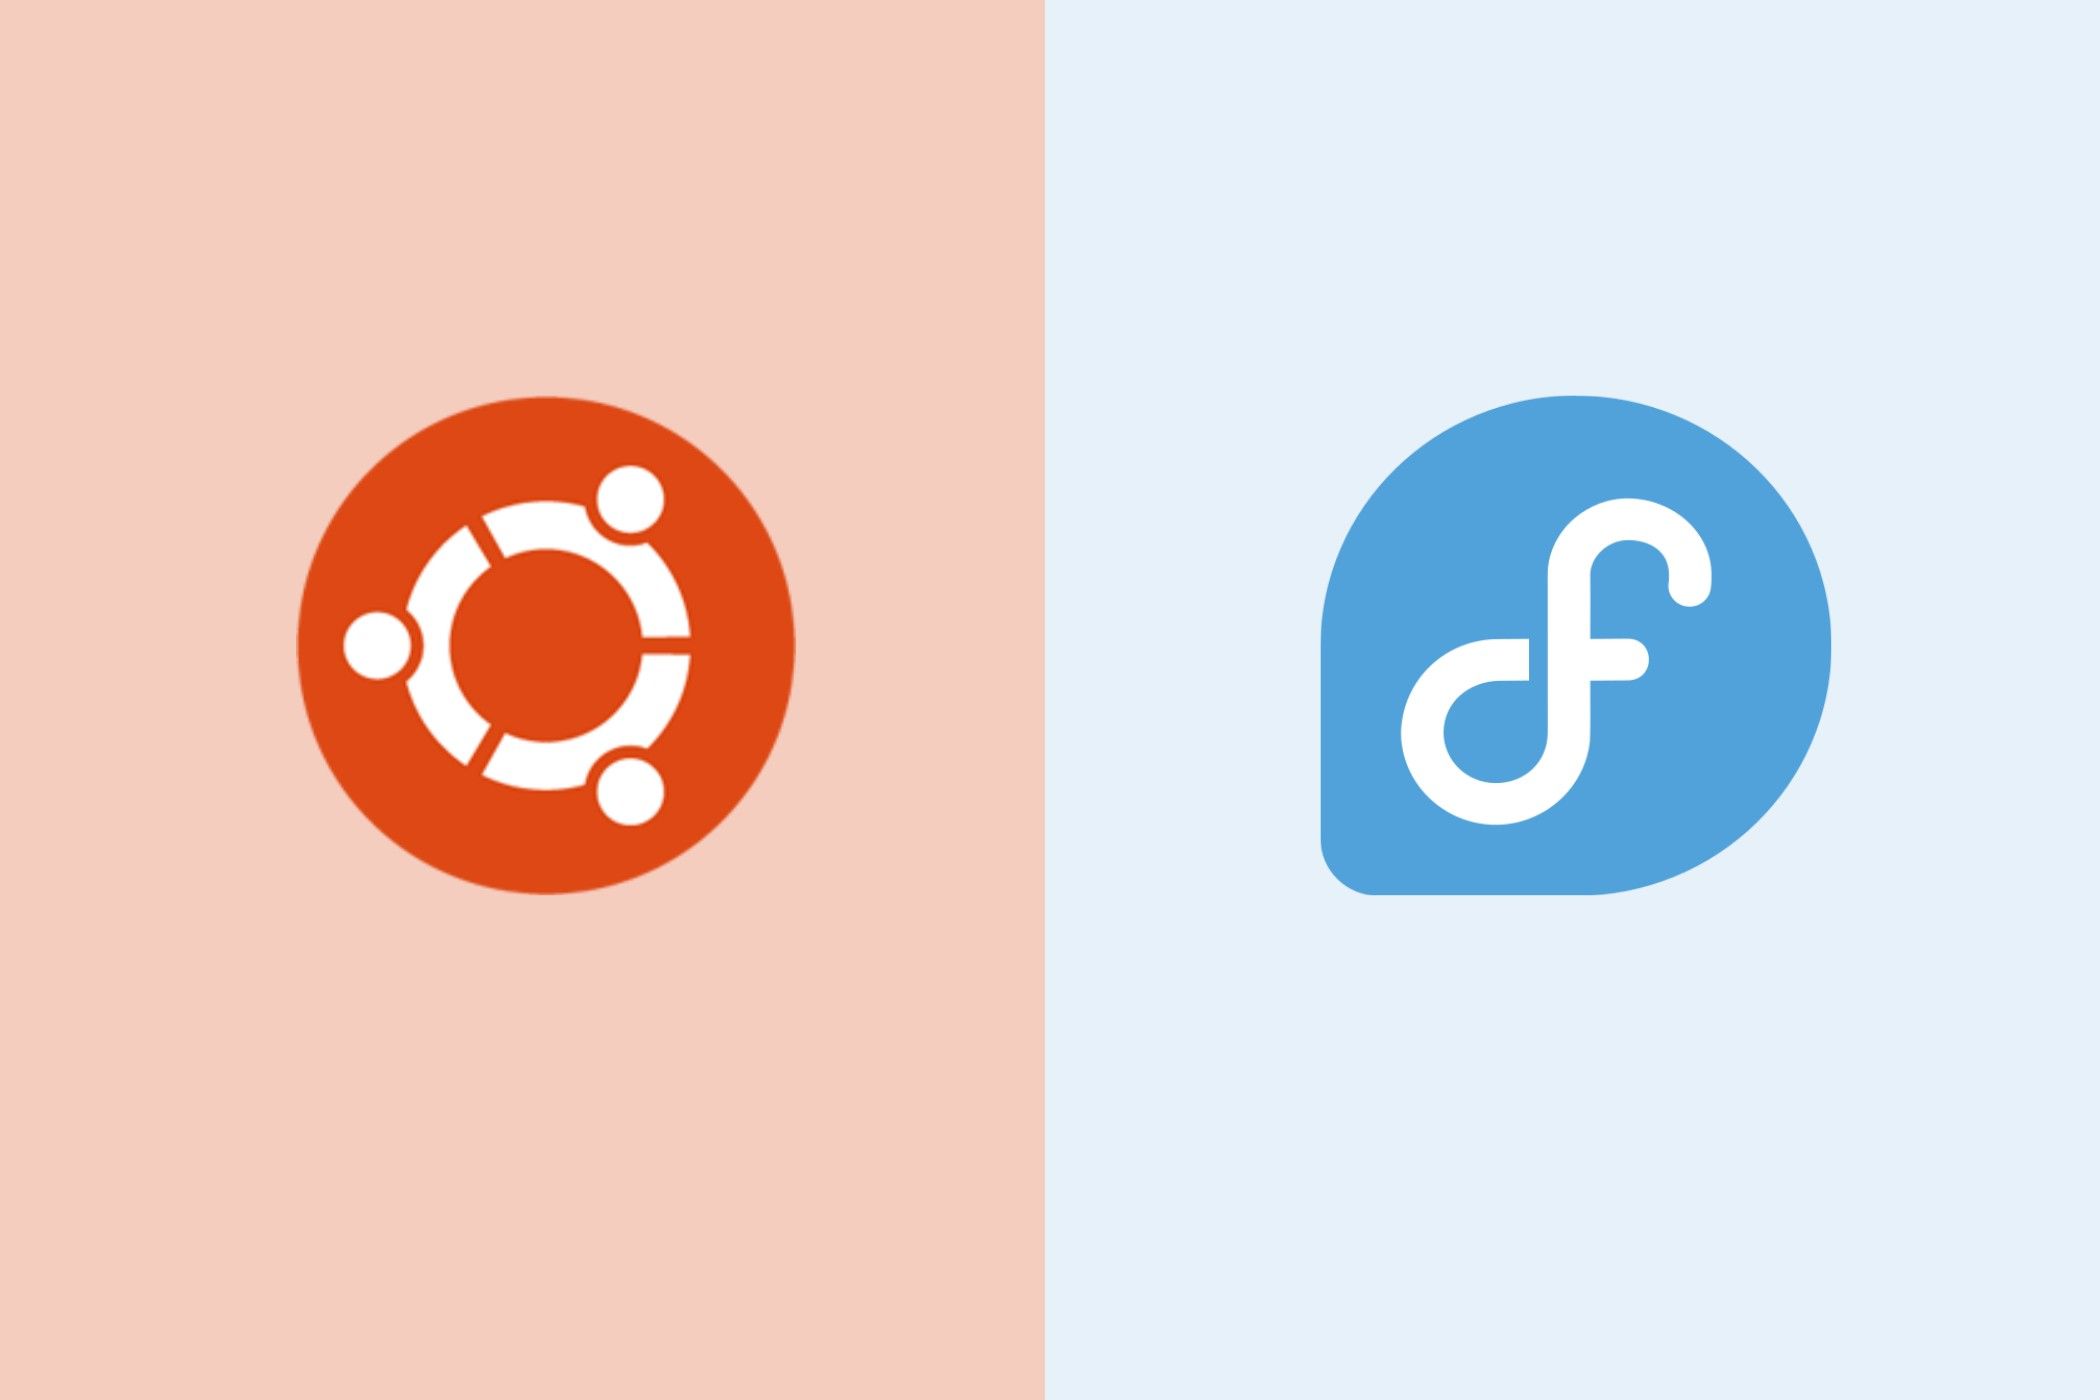 Ubuntu logo next to the Fedora logo.